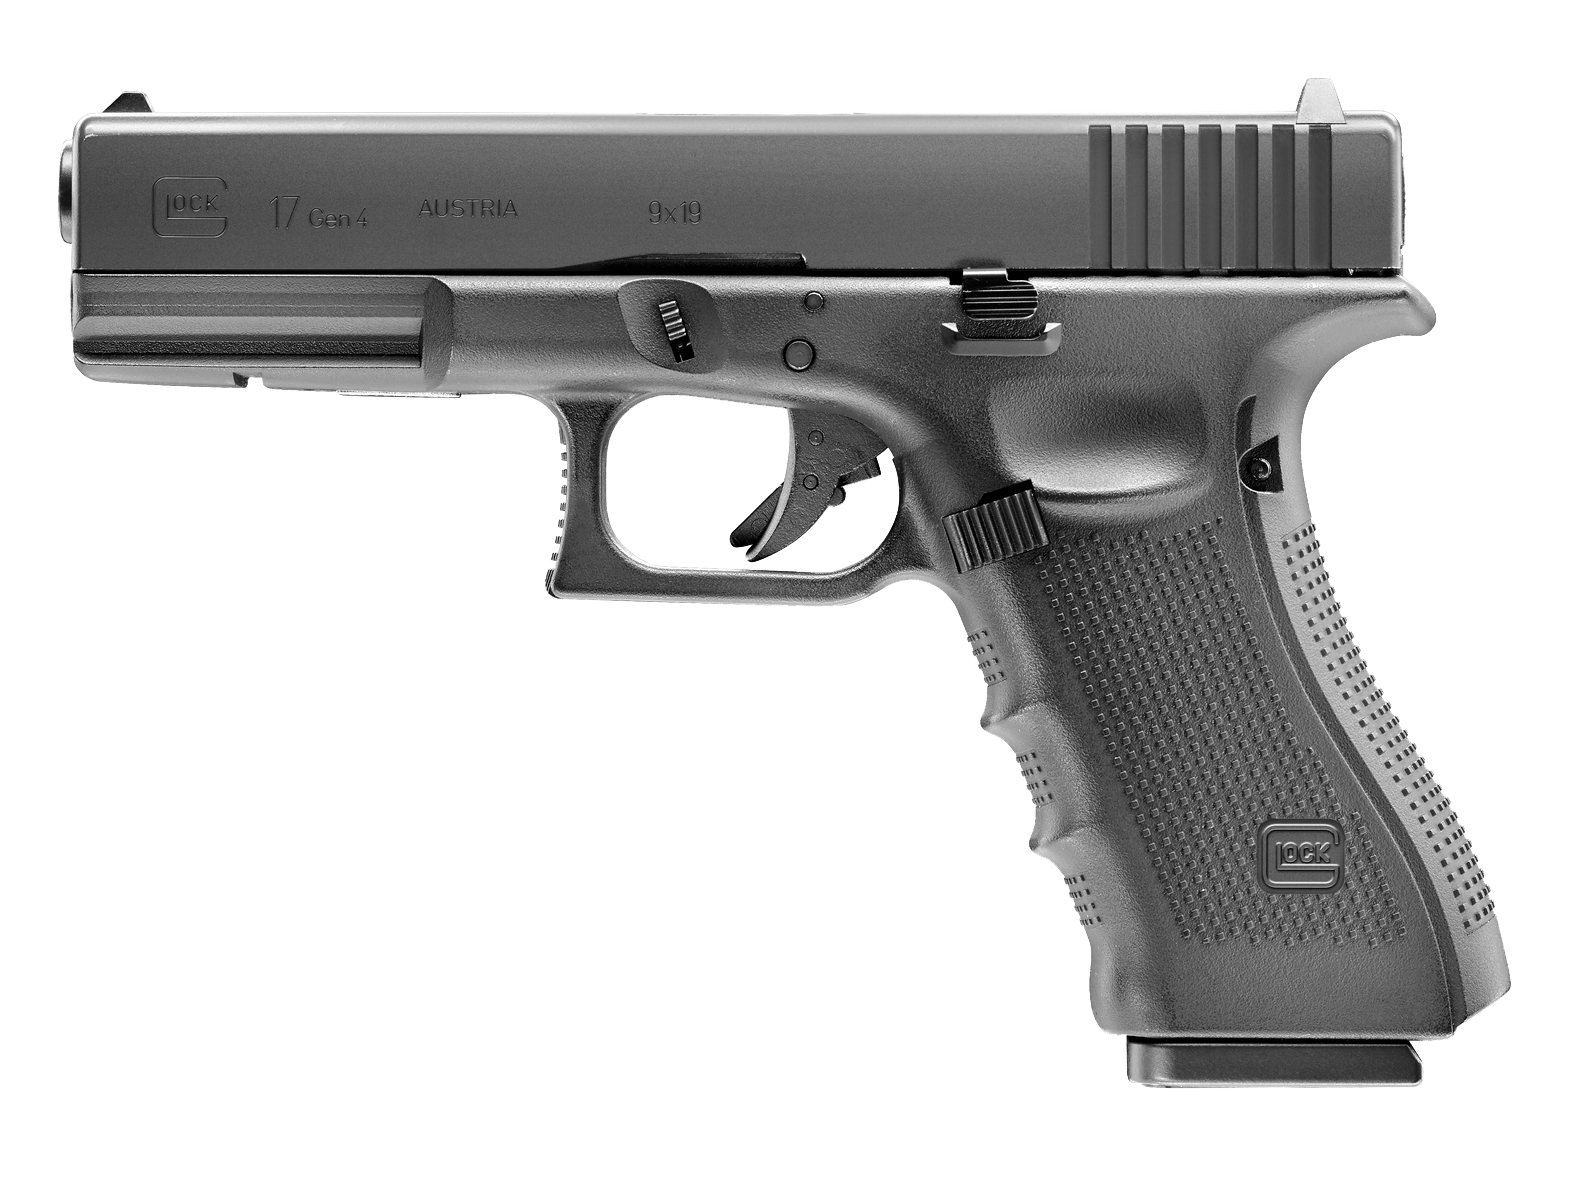 Zdjęcia - Broń zabawkowa Glock Pistolet ASG  17 gen 4 6 mm  (2.6434)